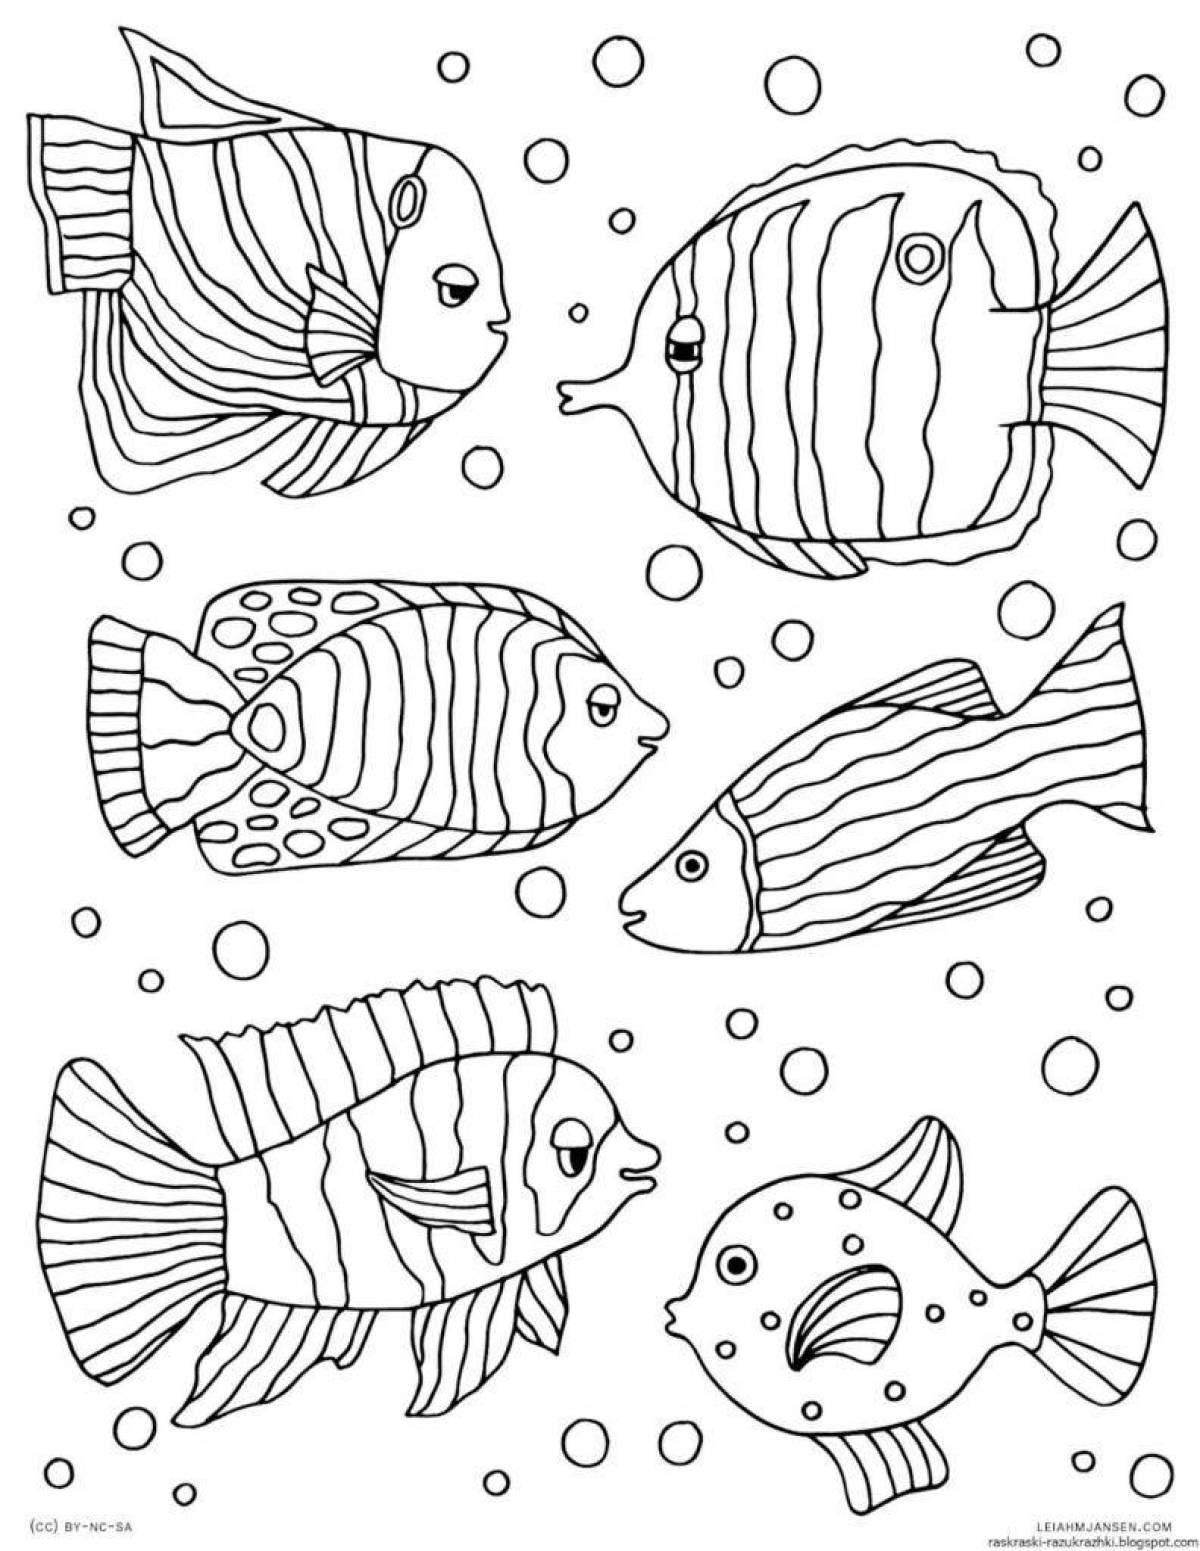 Impressive aquarium fish coloring page for kids